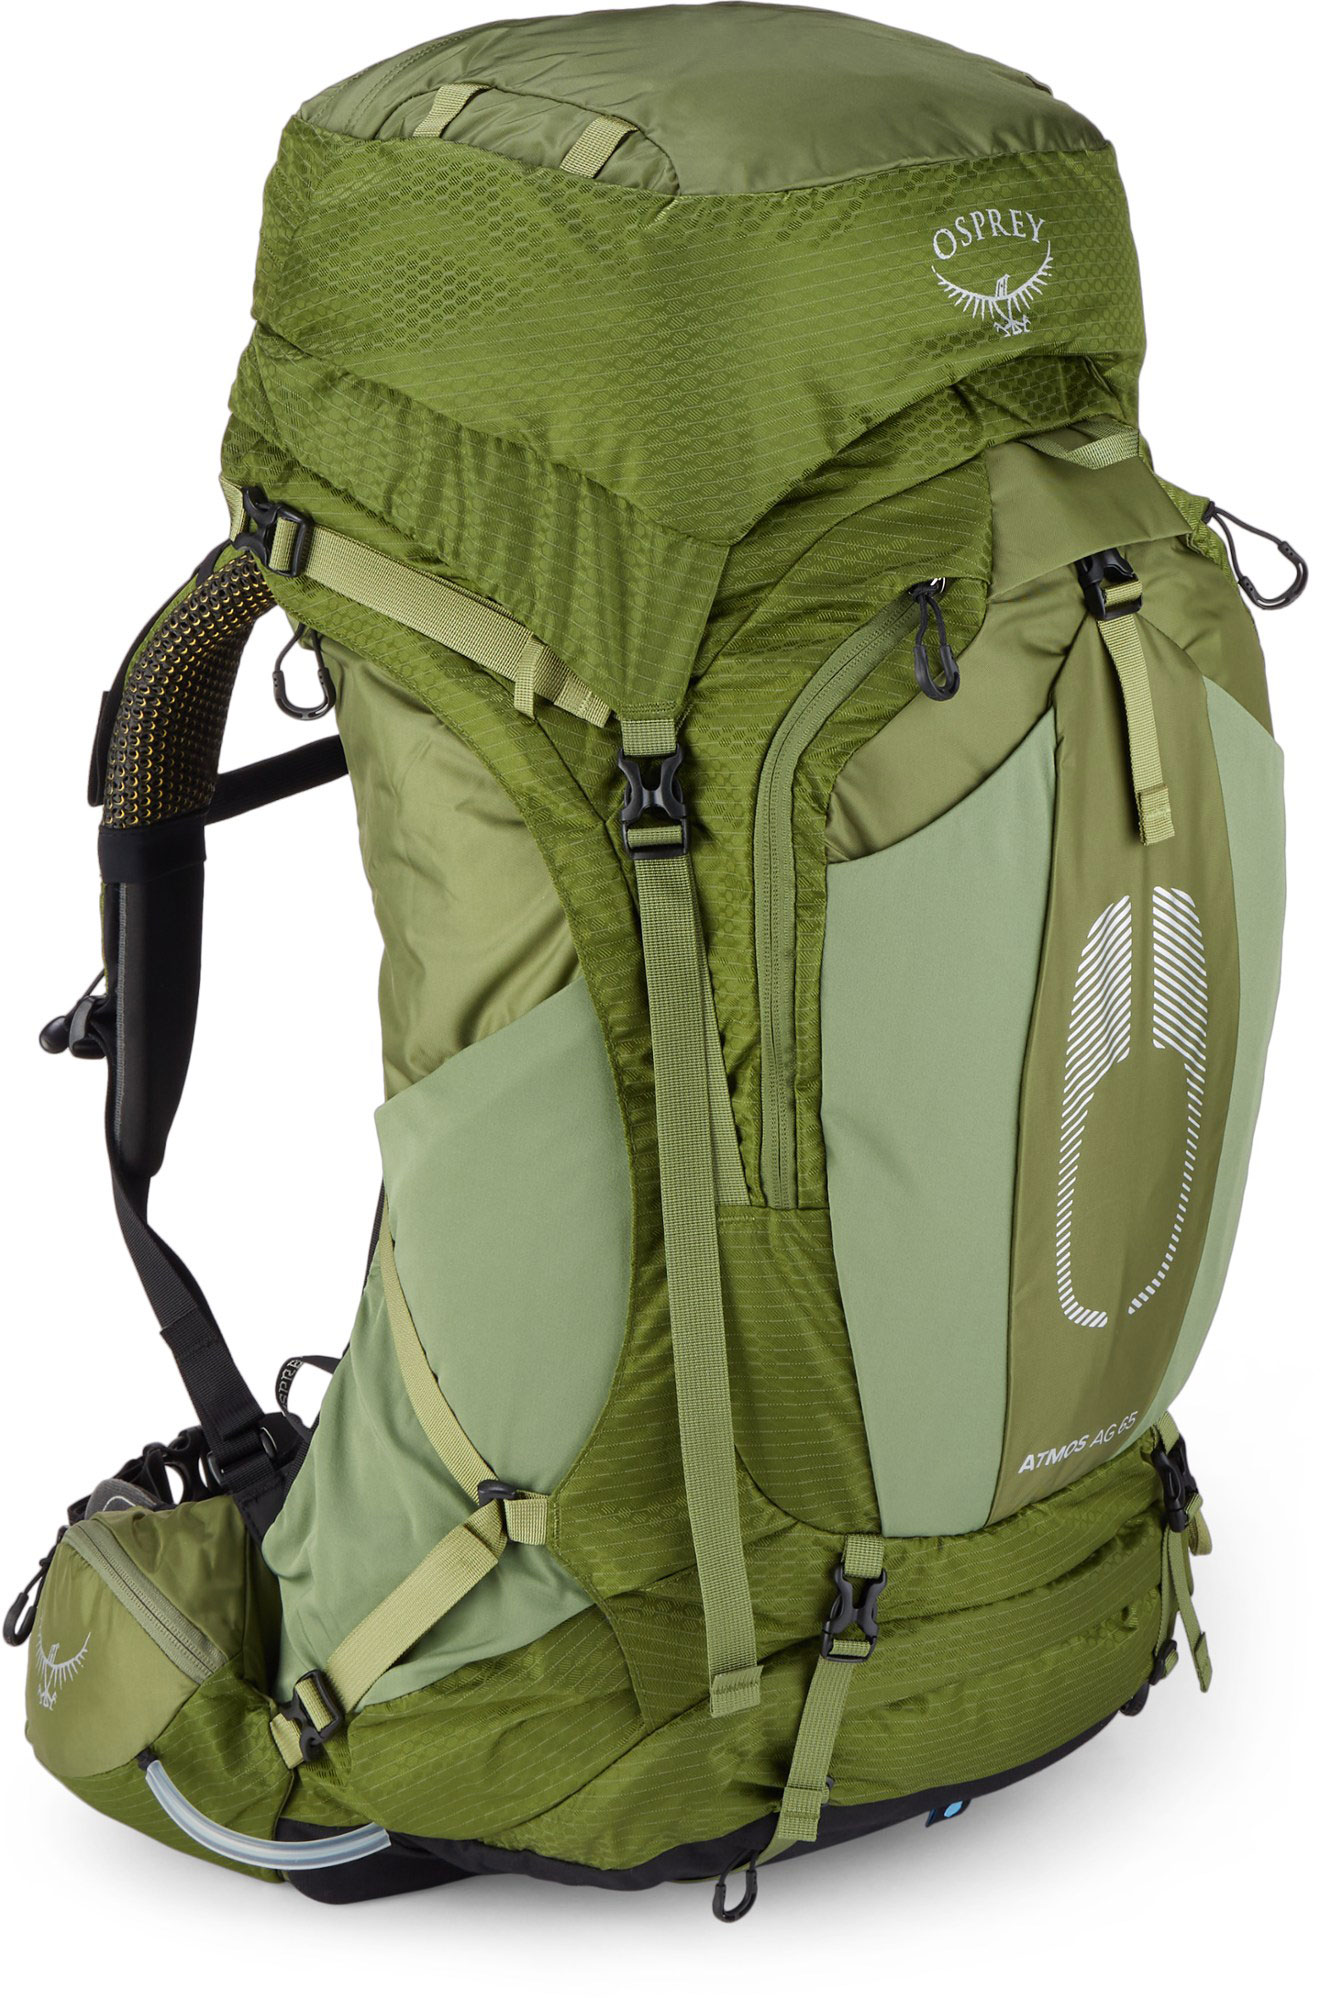 Osprey Atmos AG 65 backpacking backpack